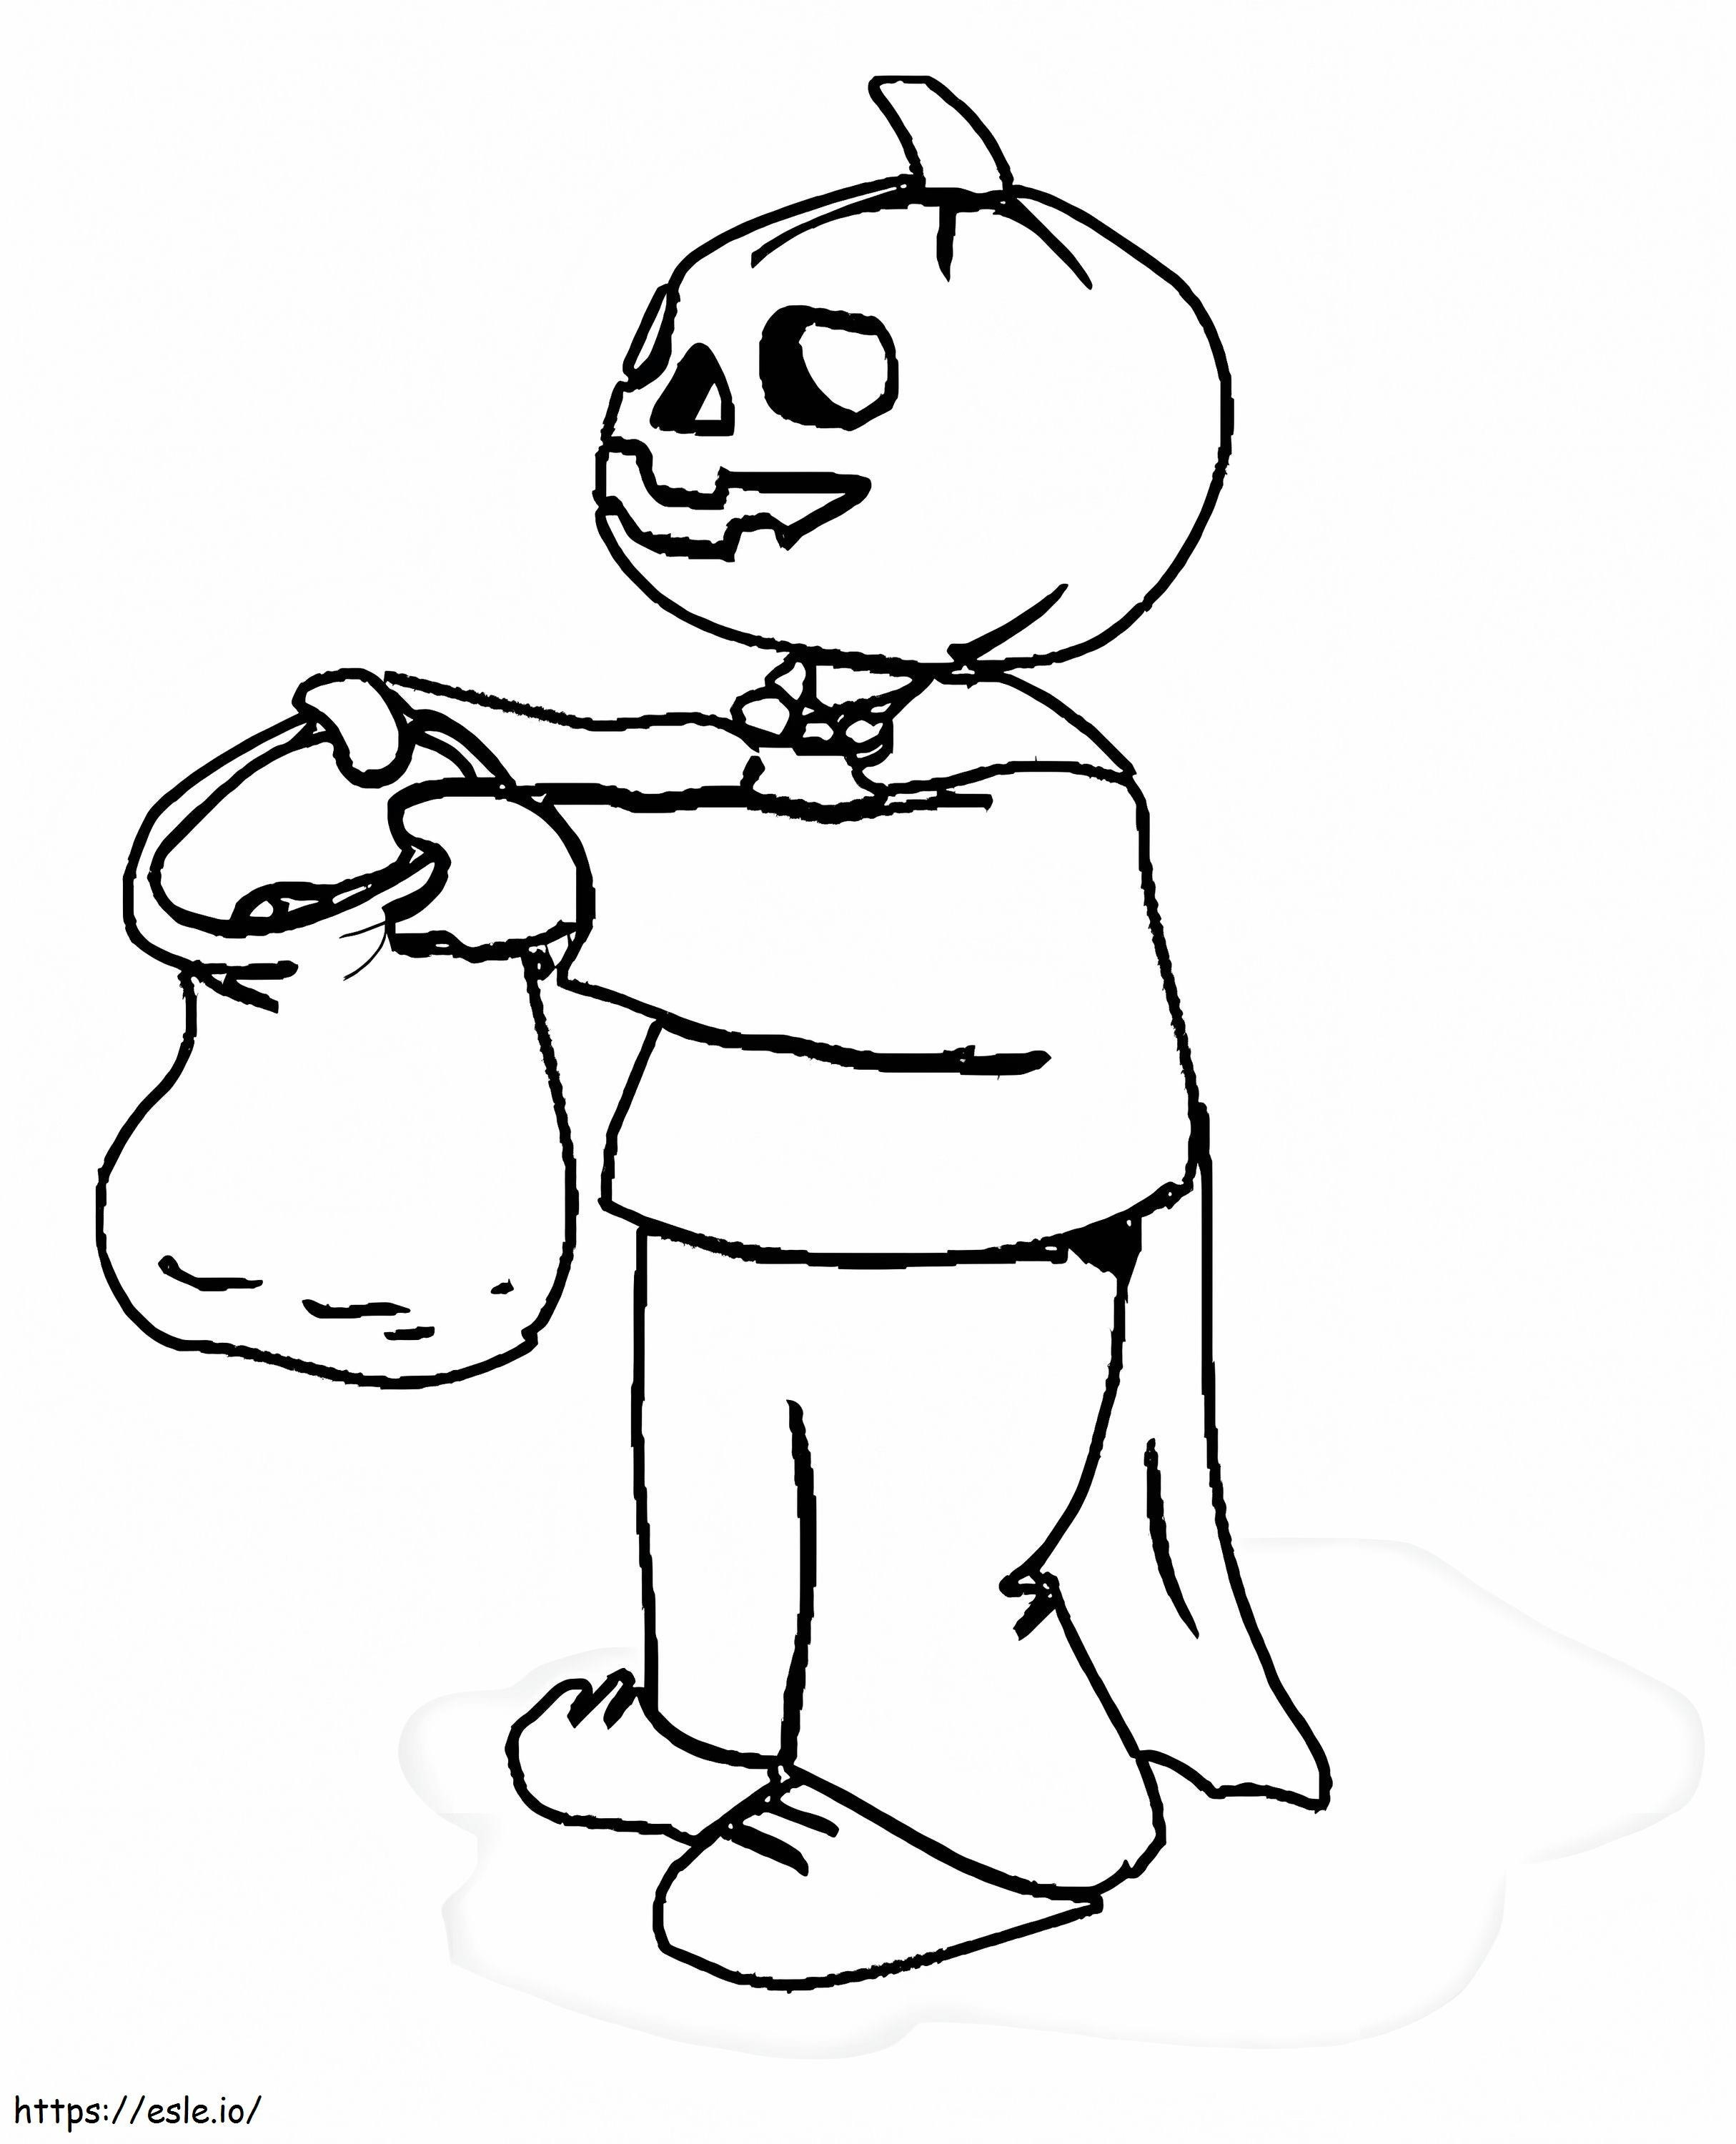 Boy With Pumpkin Head coloring page